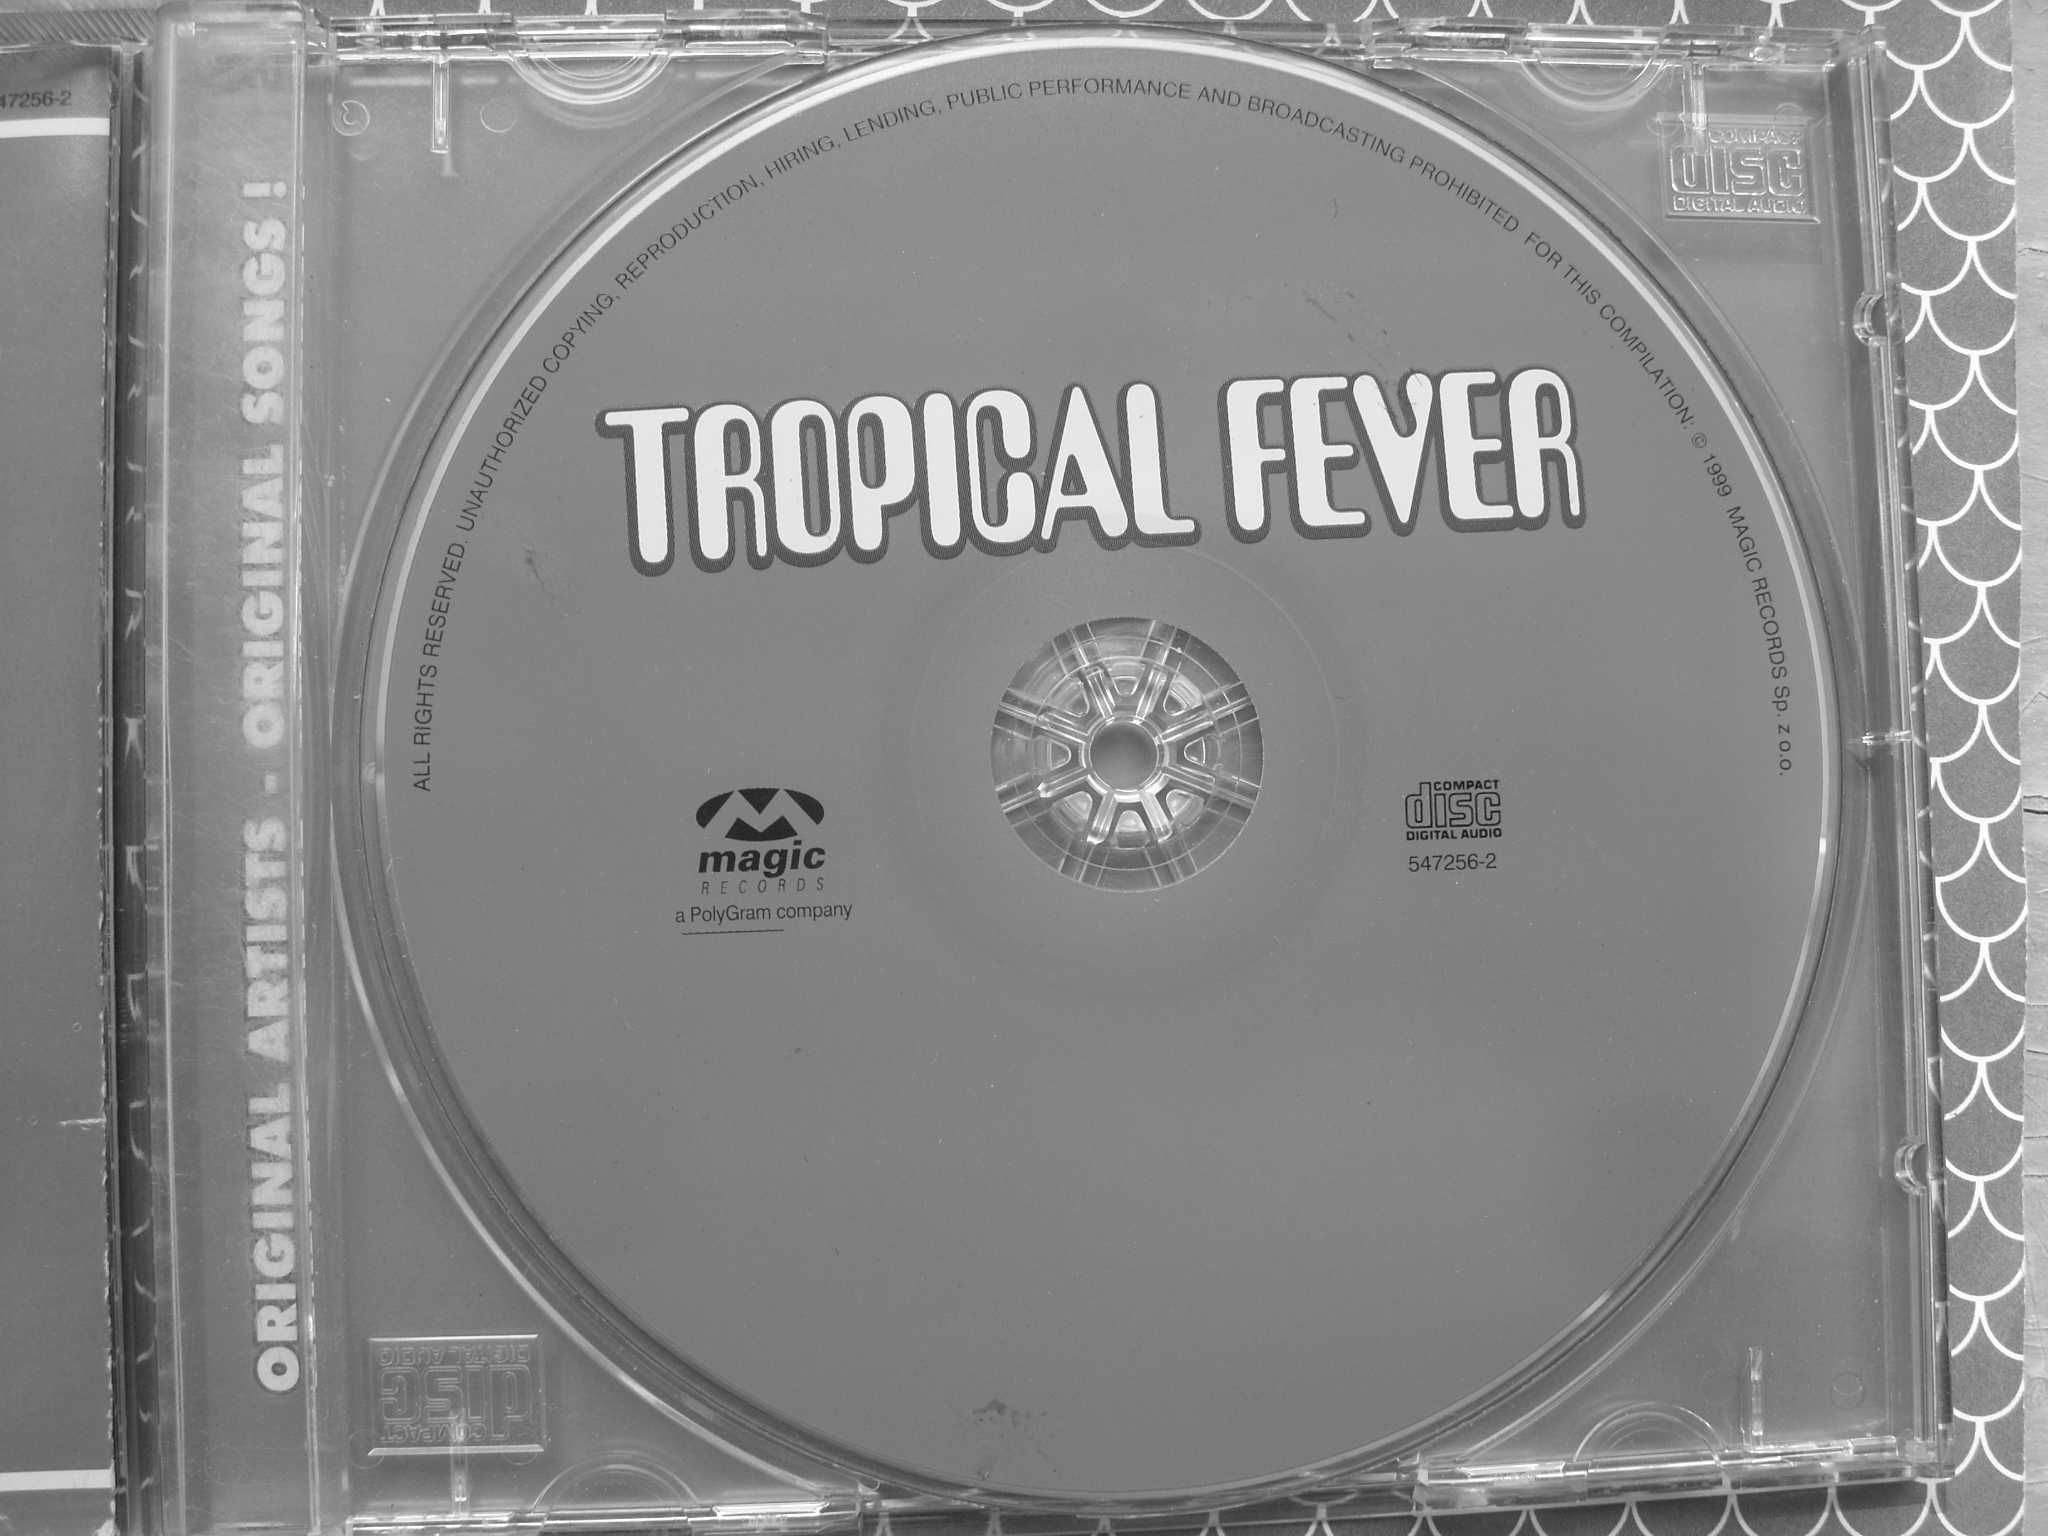 Plyta CD; TROPICAL FEVER--Loona, 1999 rok.